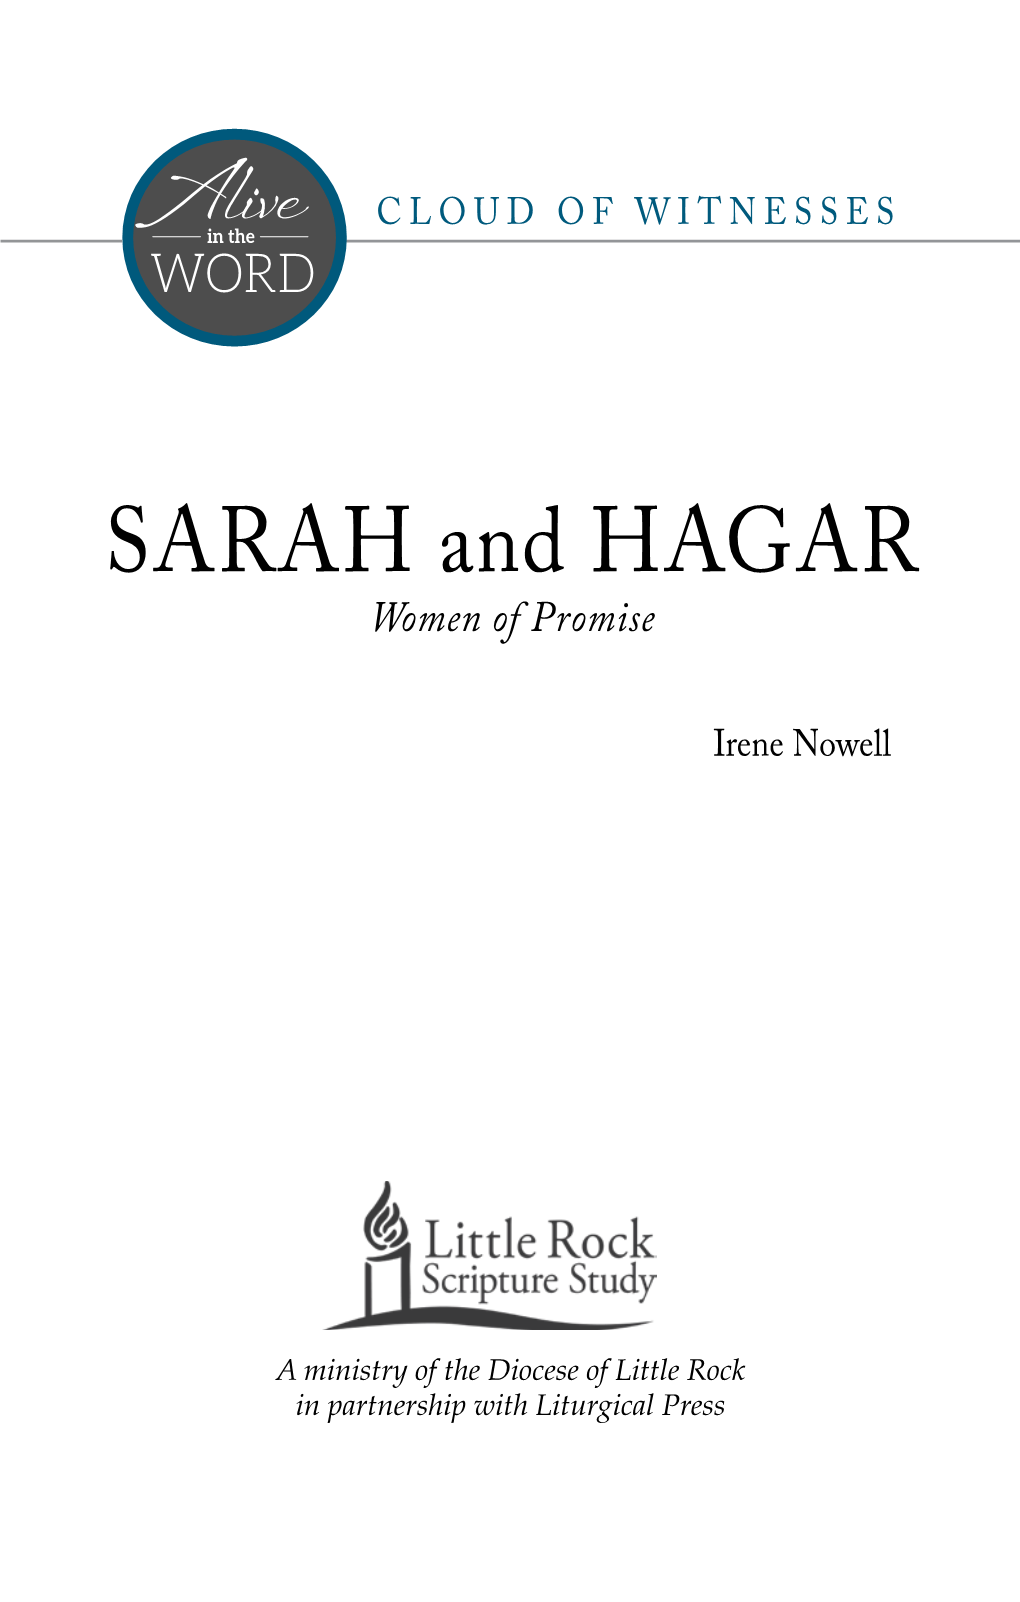 SARAH and HAGAR Women of Promise